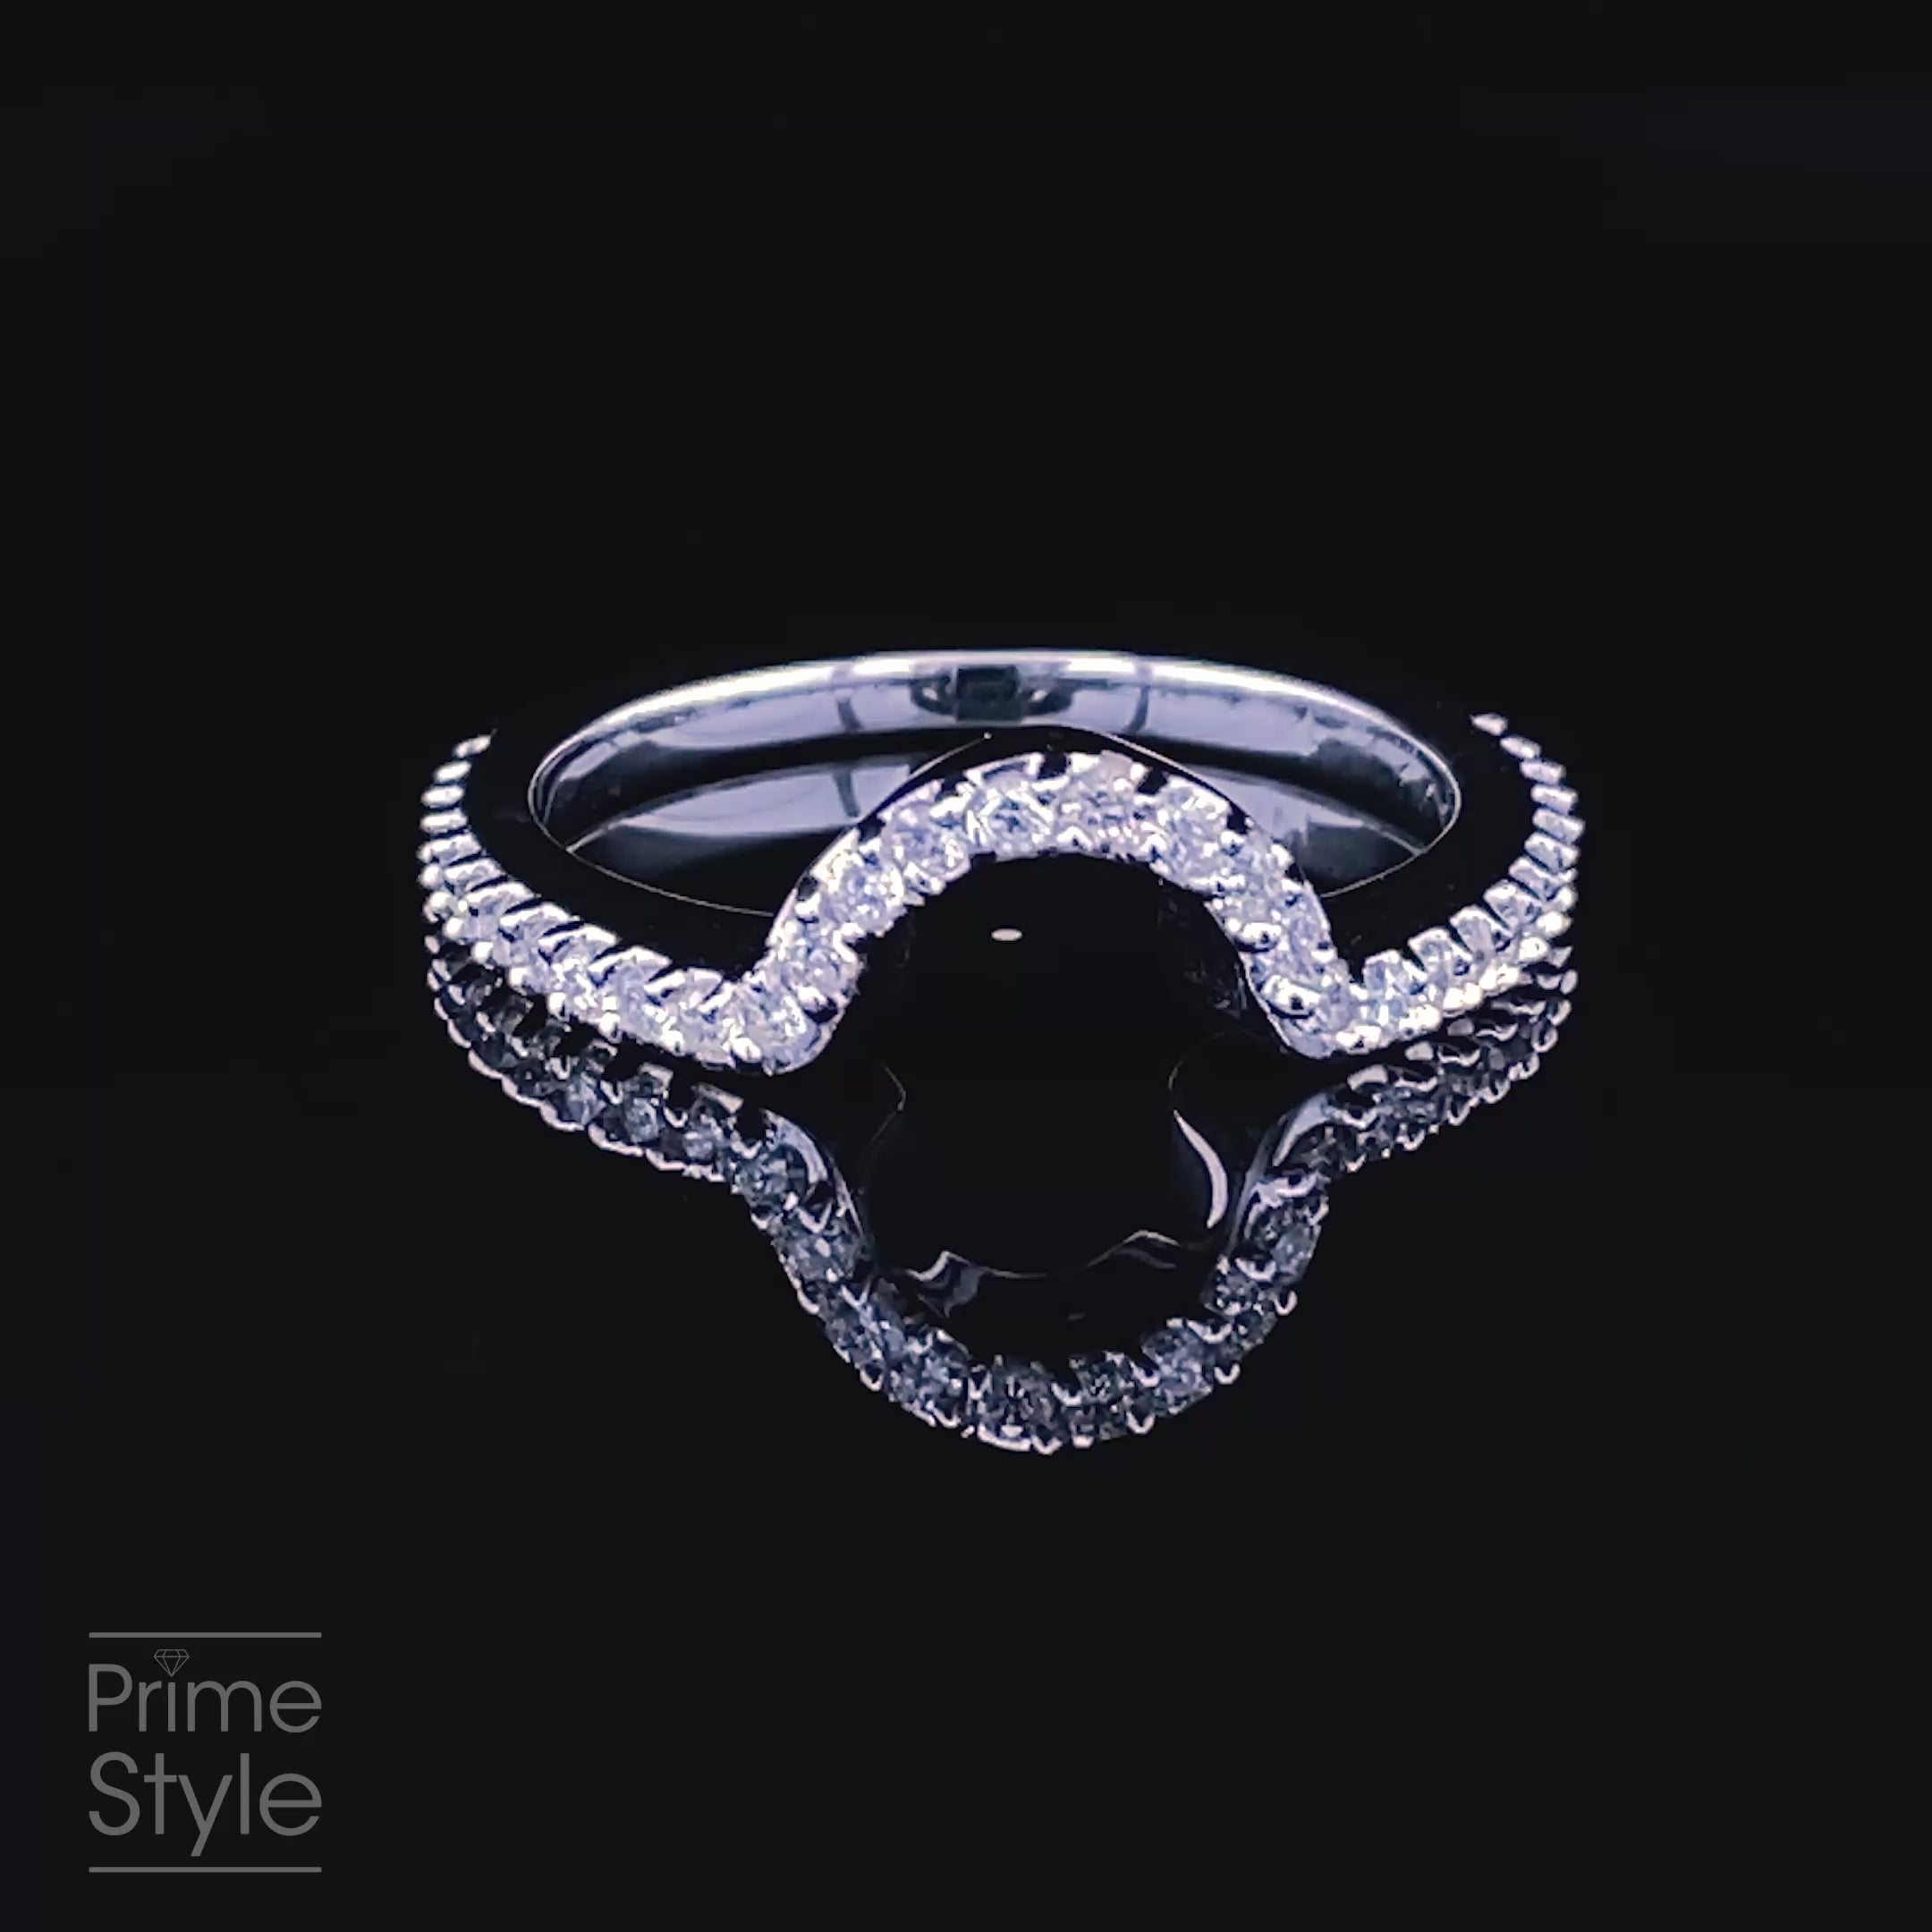 Unique 0.35 CT Round Cut Diamond Wedding Ring in 14 KT White Gold